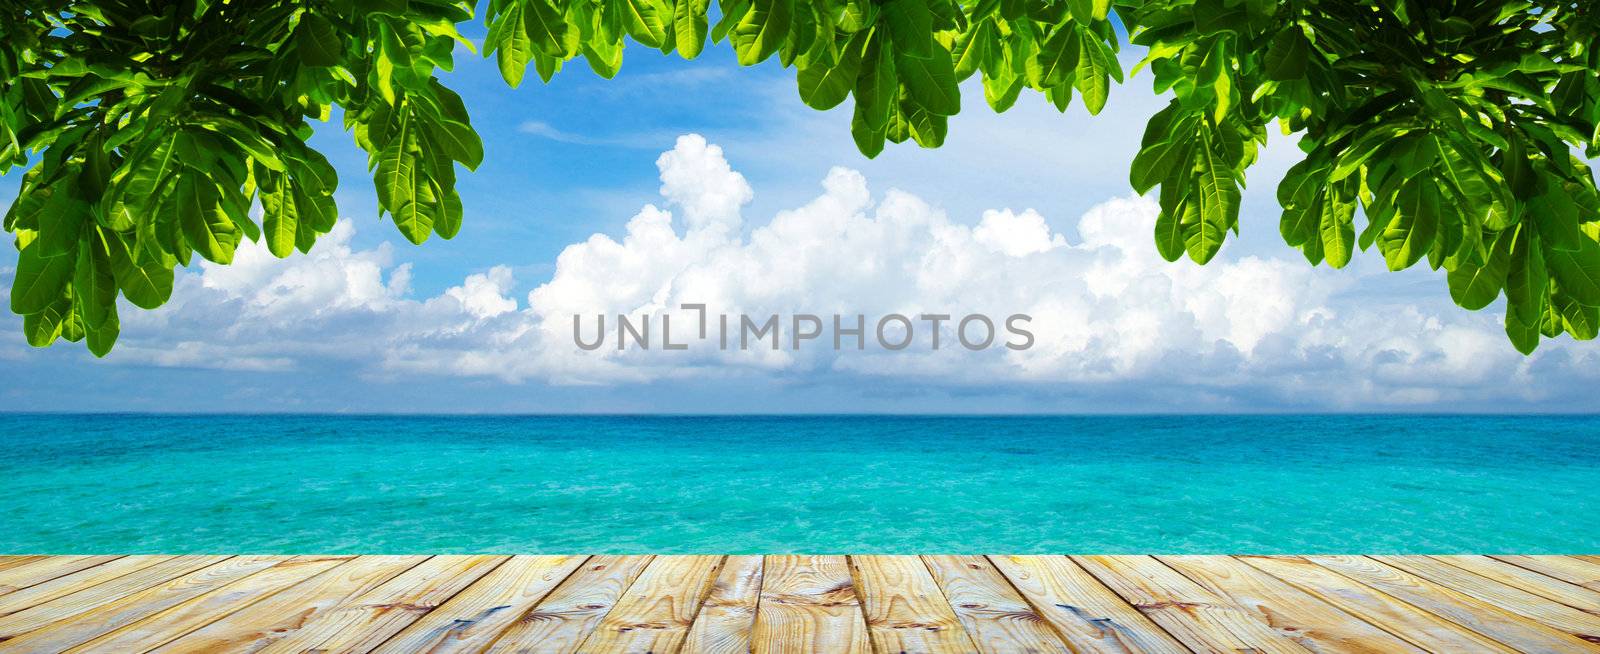 beach and tropical sea by Pakhnyushchyy